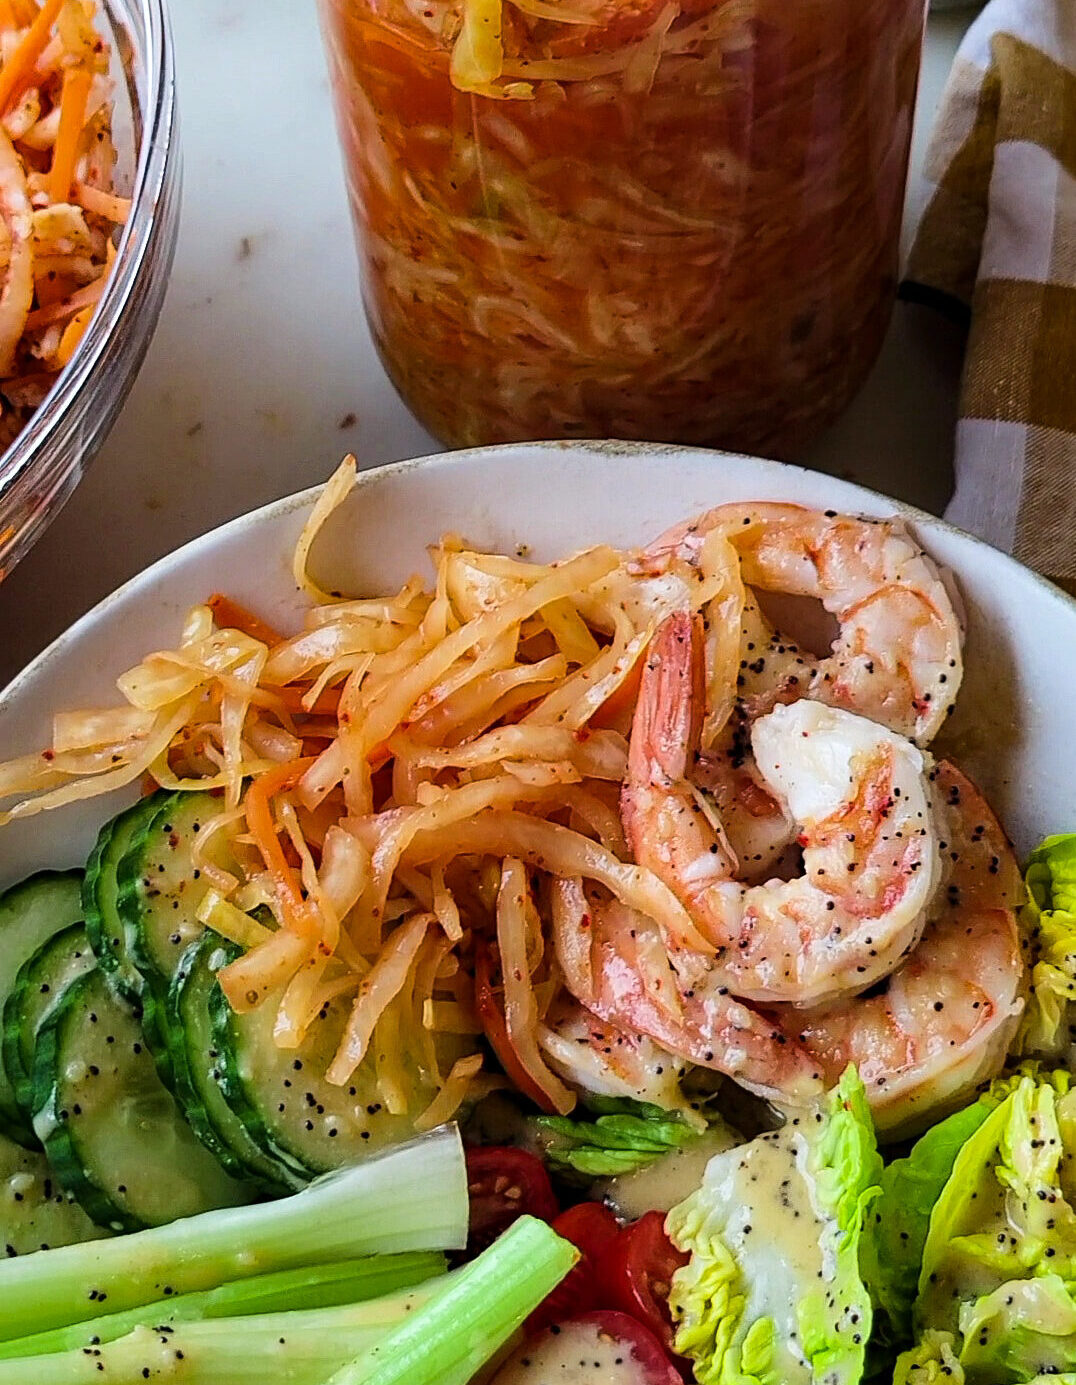 A shrimp bowl with kimchi sauerkraut, with a jar of Kimchi Sauerkraut in the background.